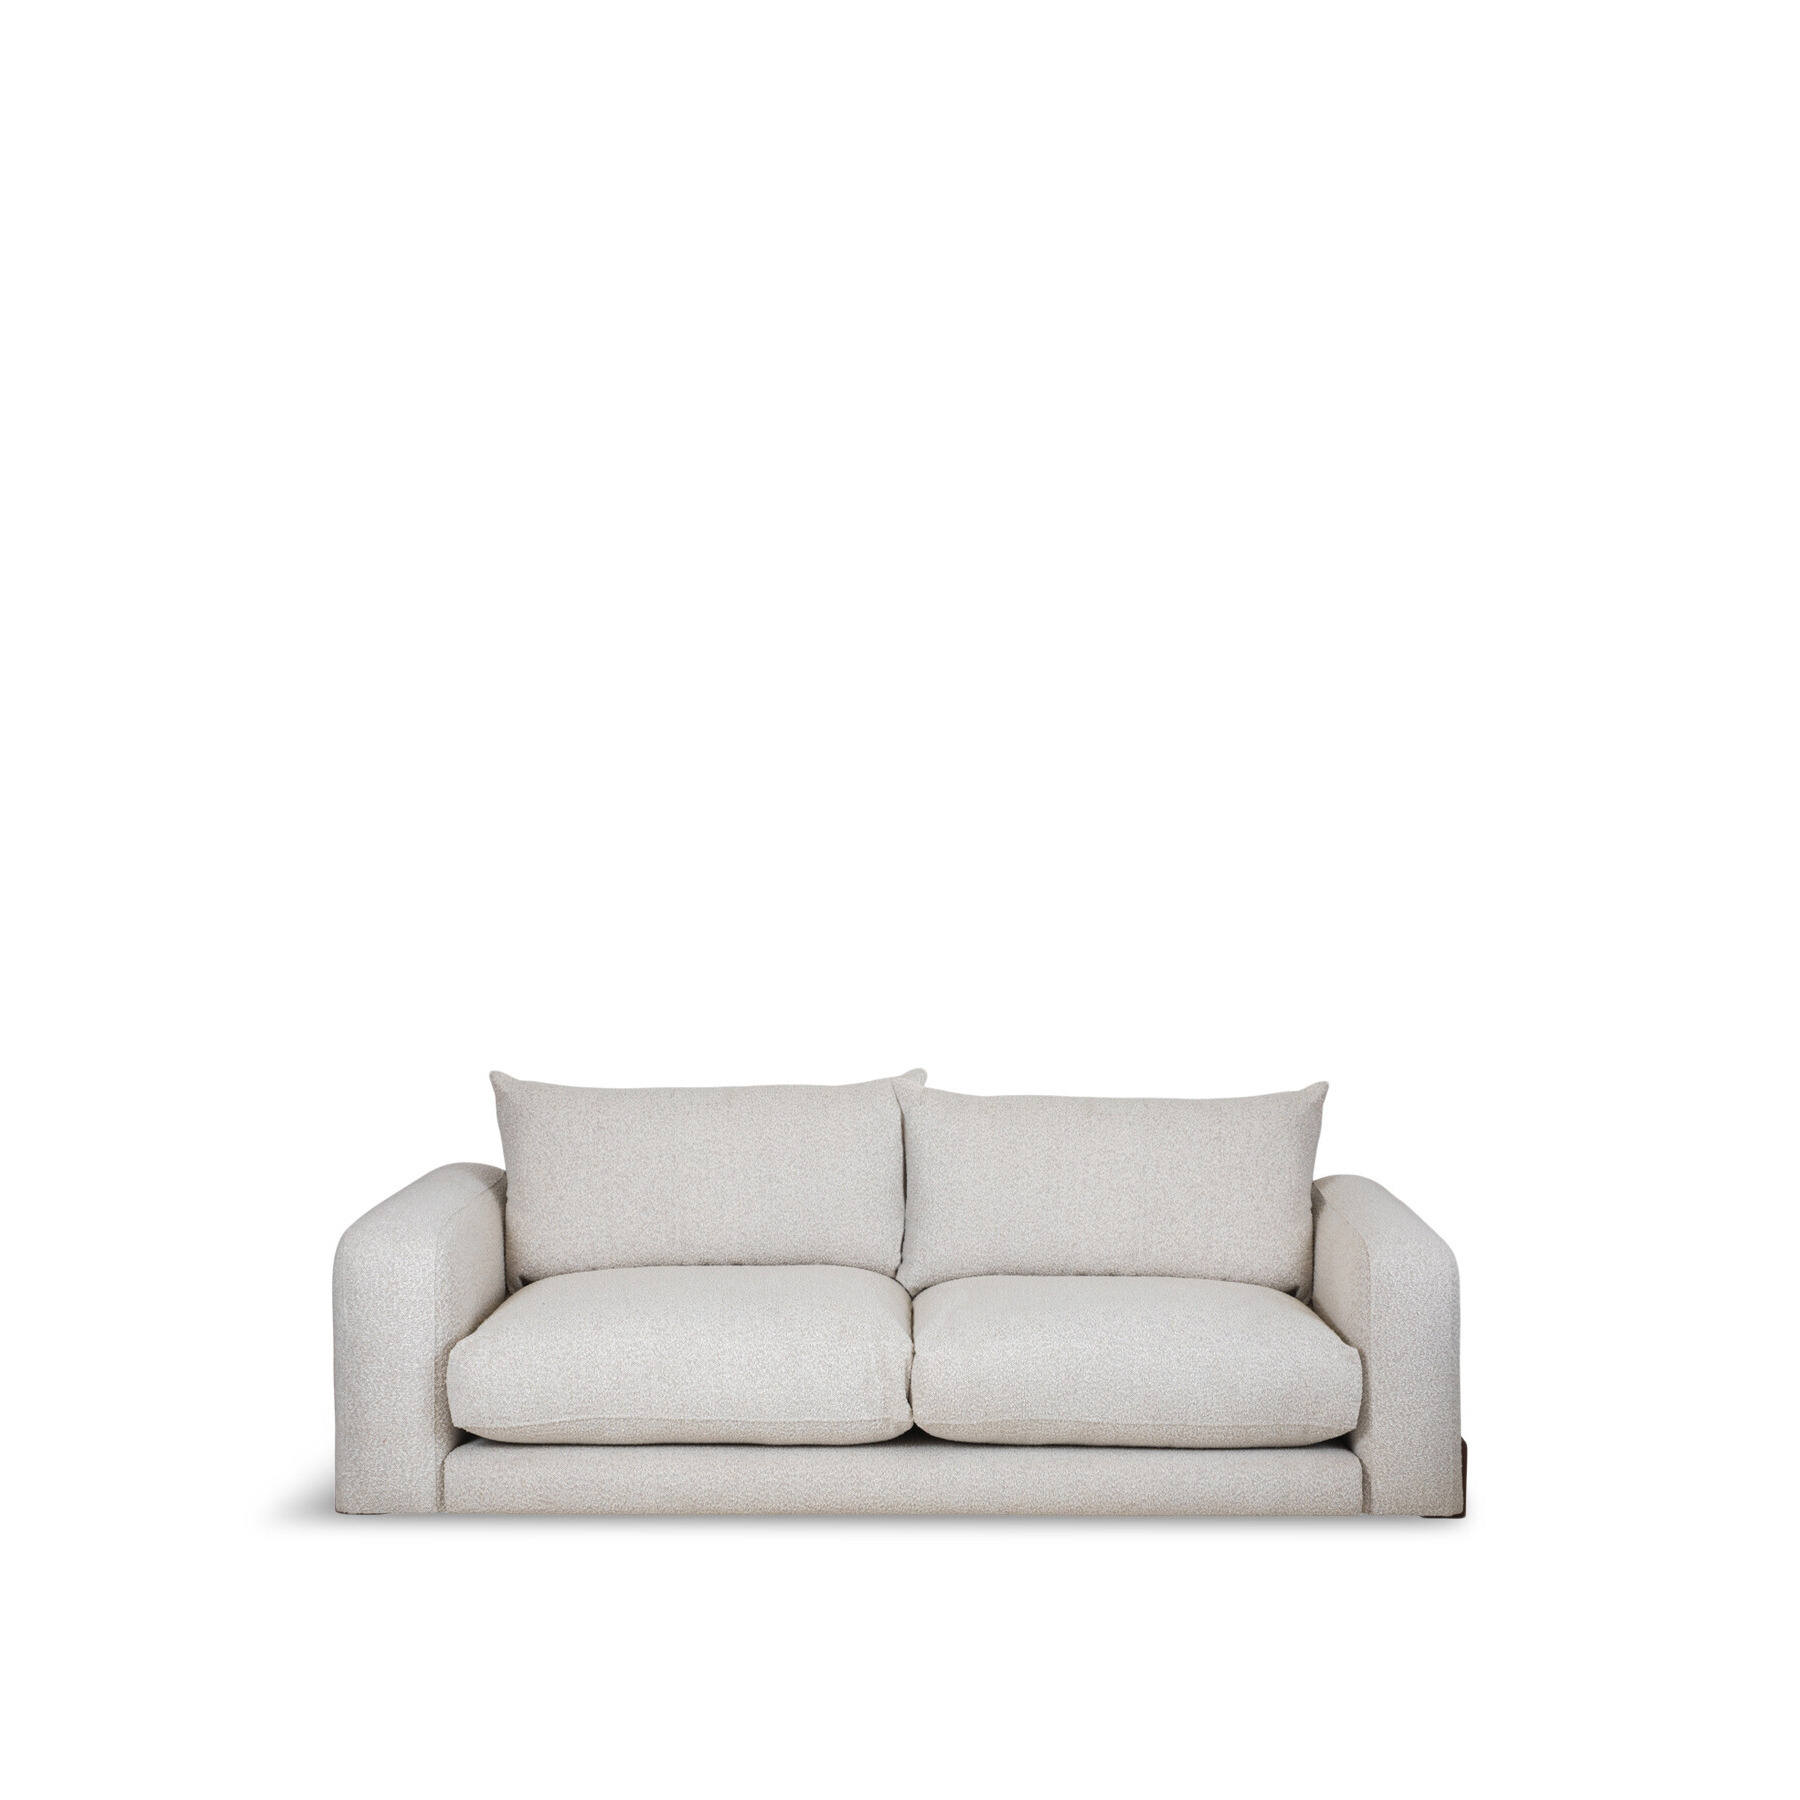 Heal's Nuvola 4 Seater Sofa Chunky Boucle Ecru - Size 234x104x87 Cream - image 1